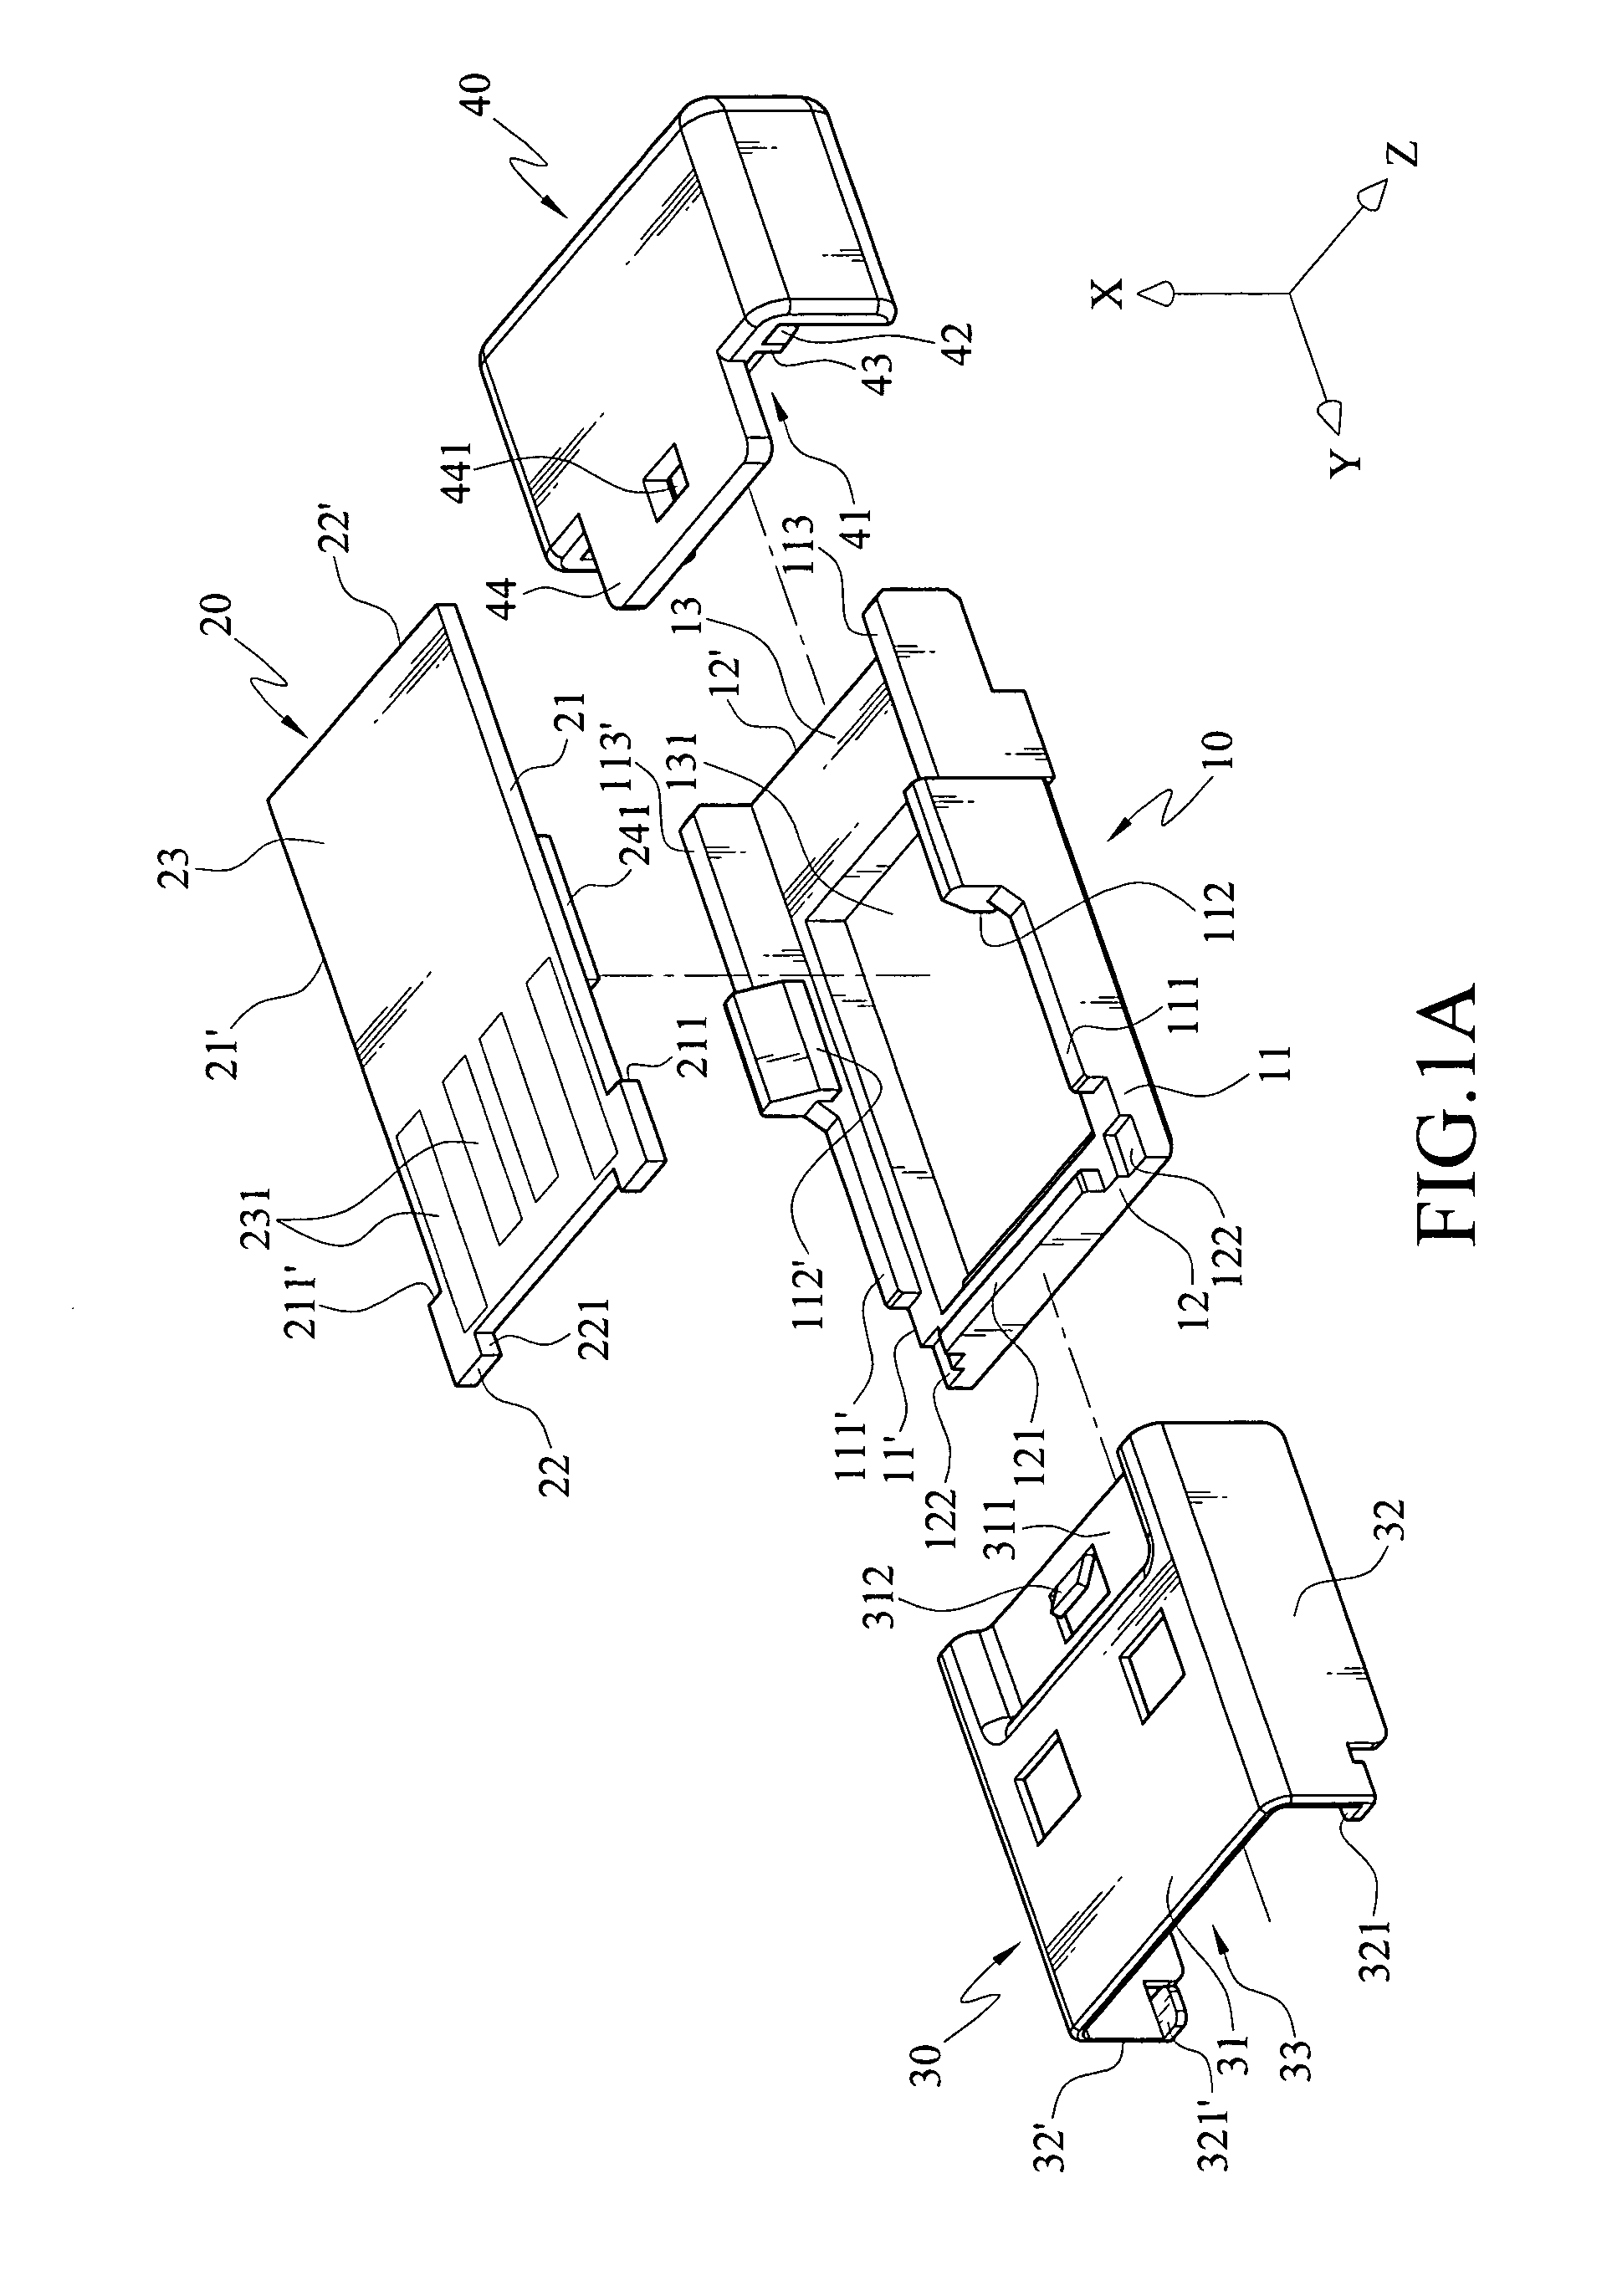 Circuit interface device